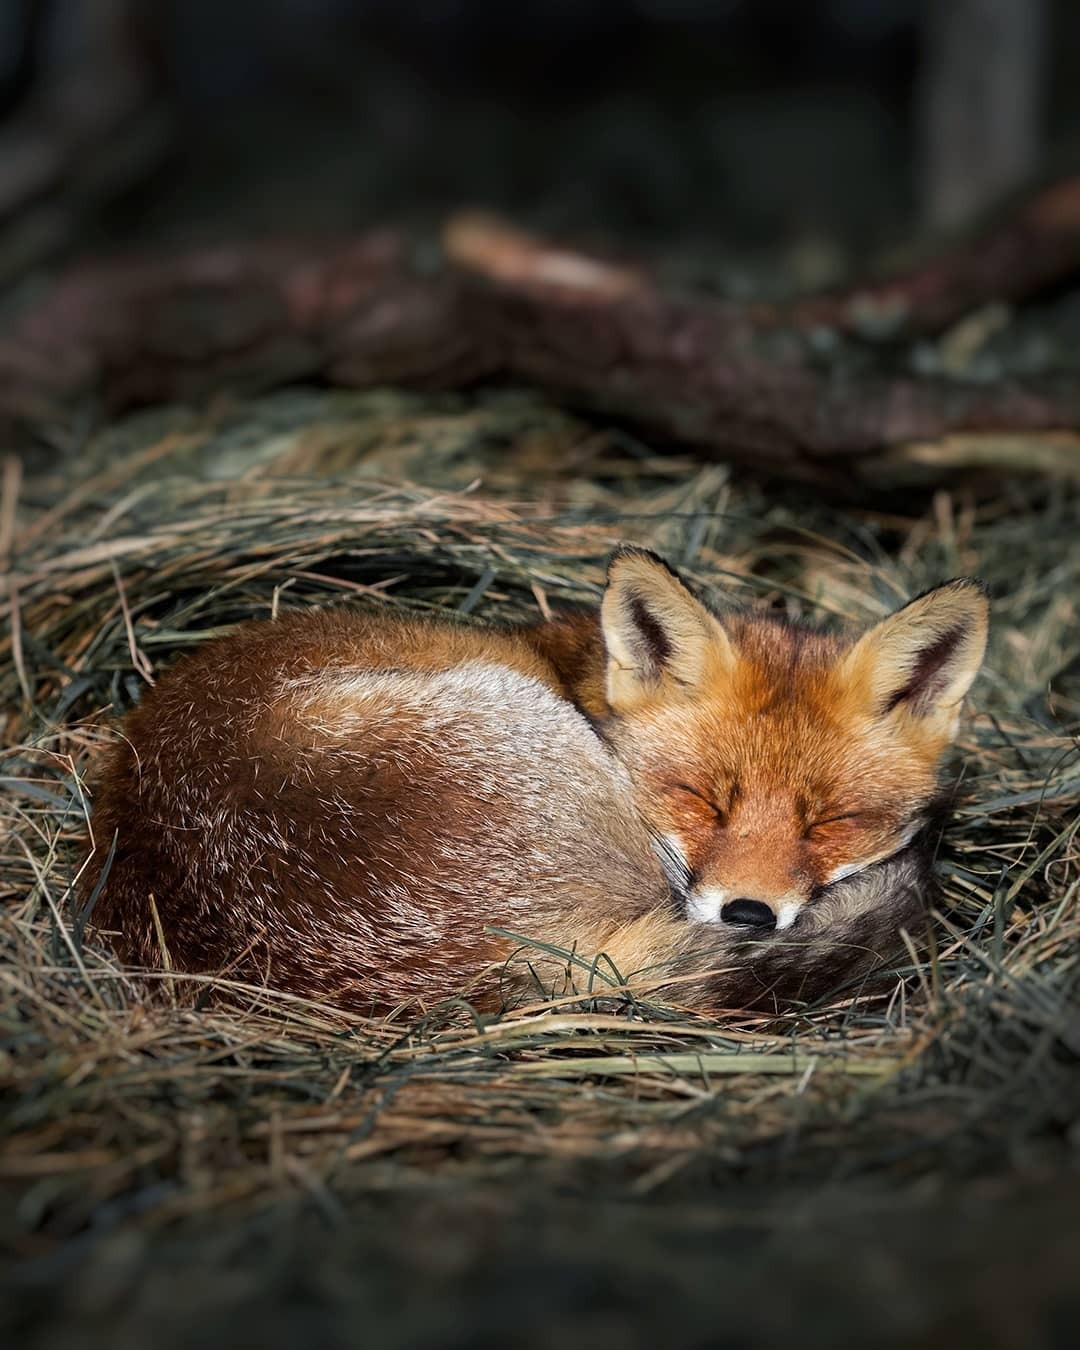 everythingfox:
â€œ Tired baby fox
Photo by Ossi Saarinen
â€